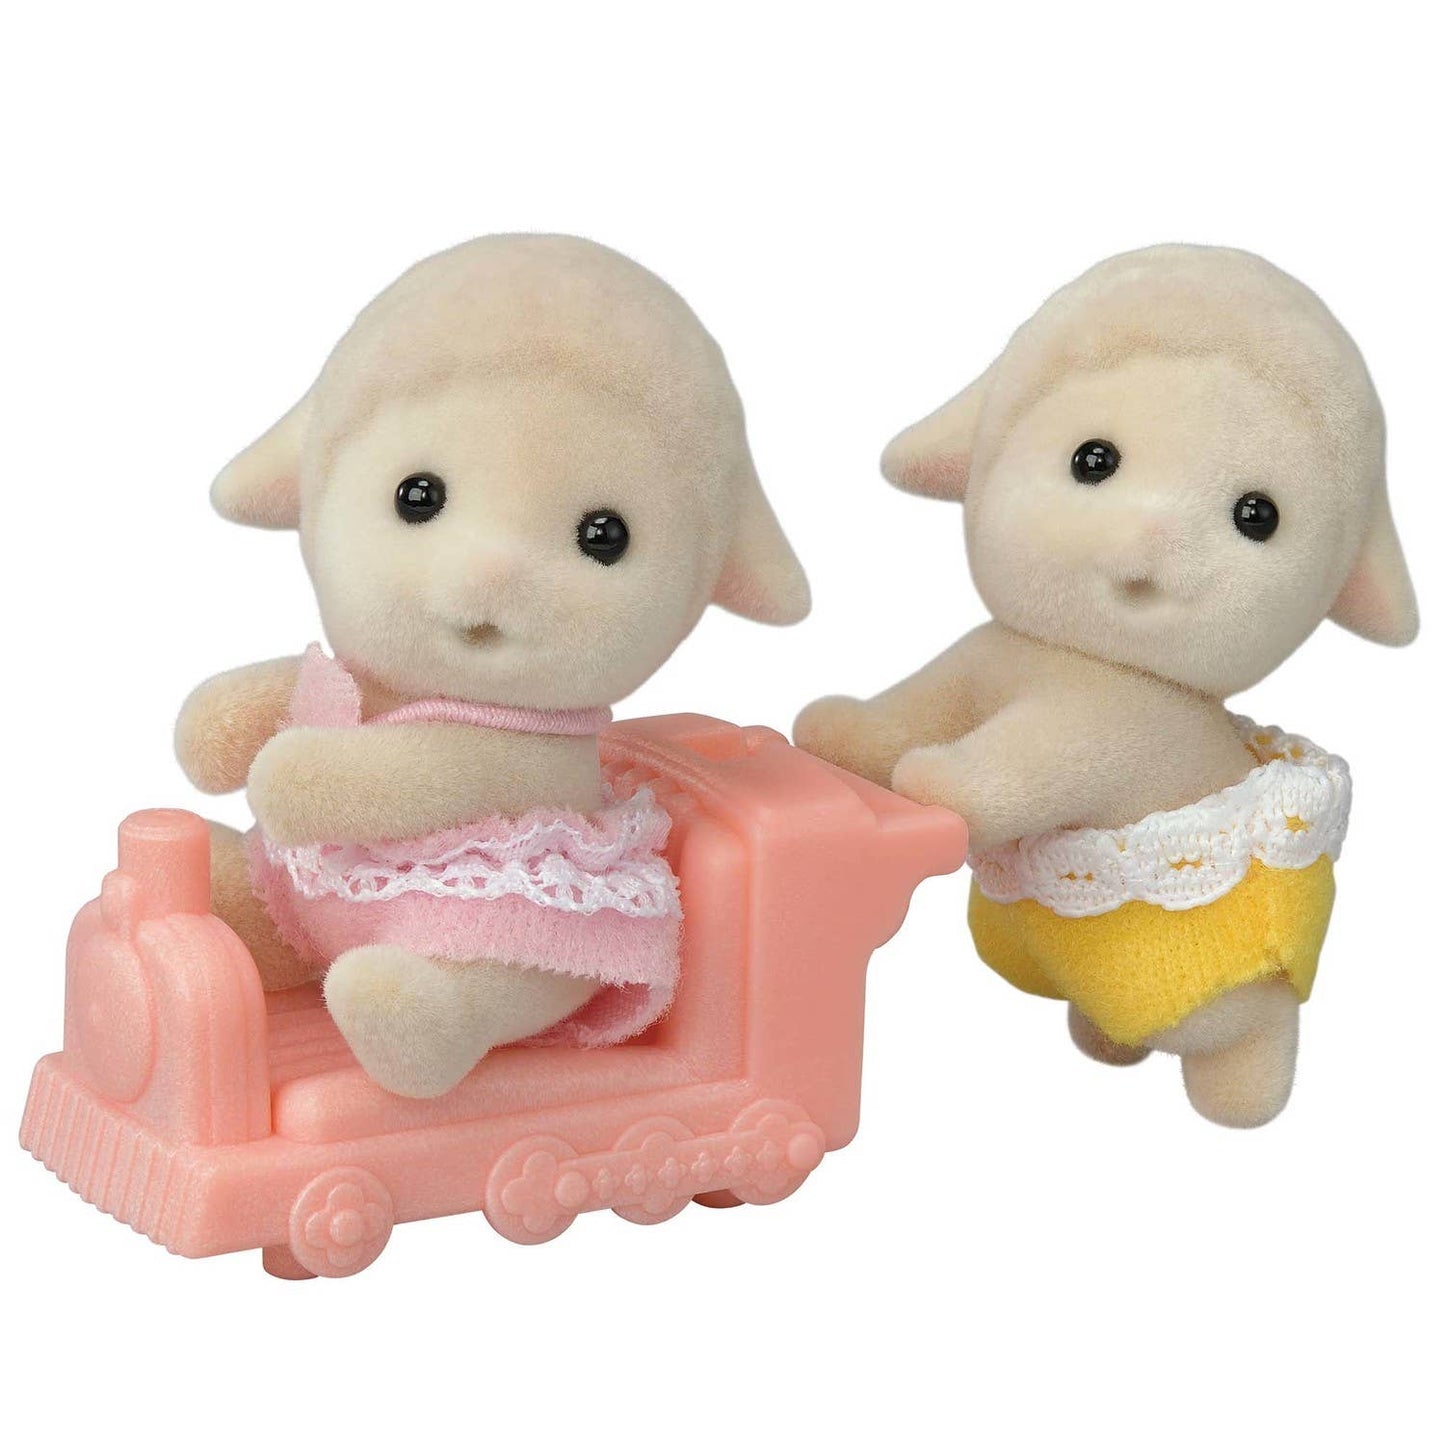 Sheep Twins Doll Figures